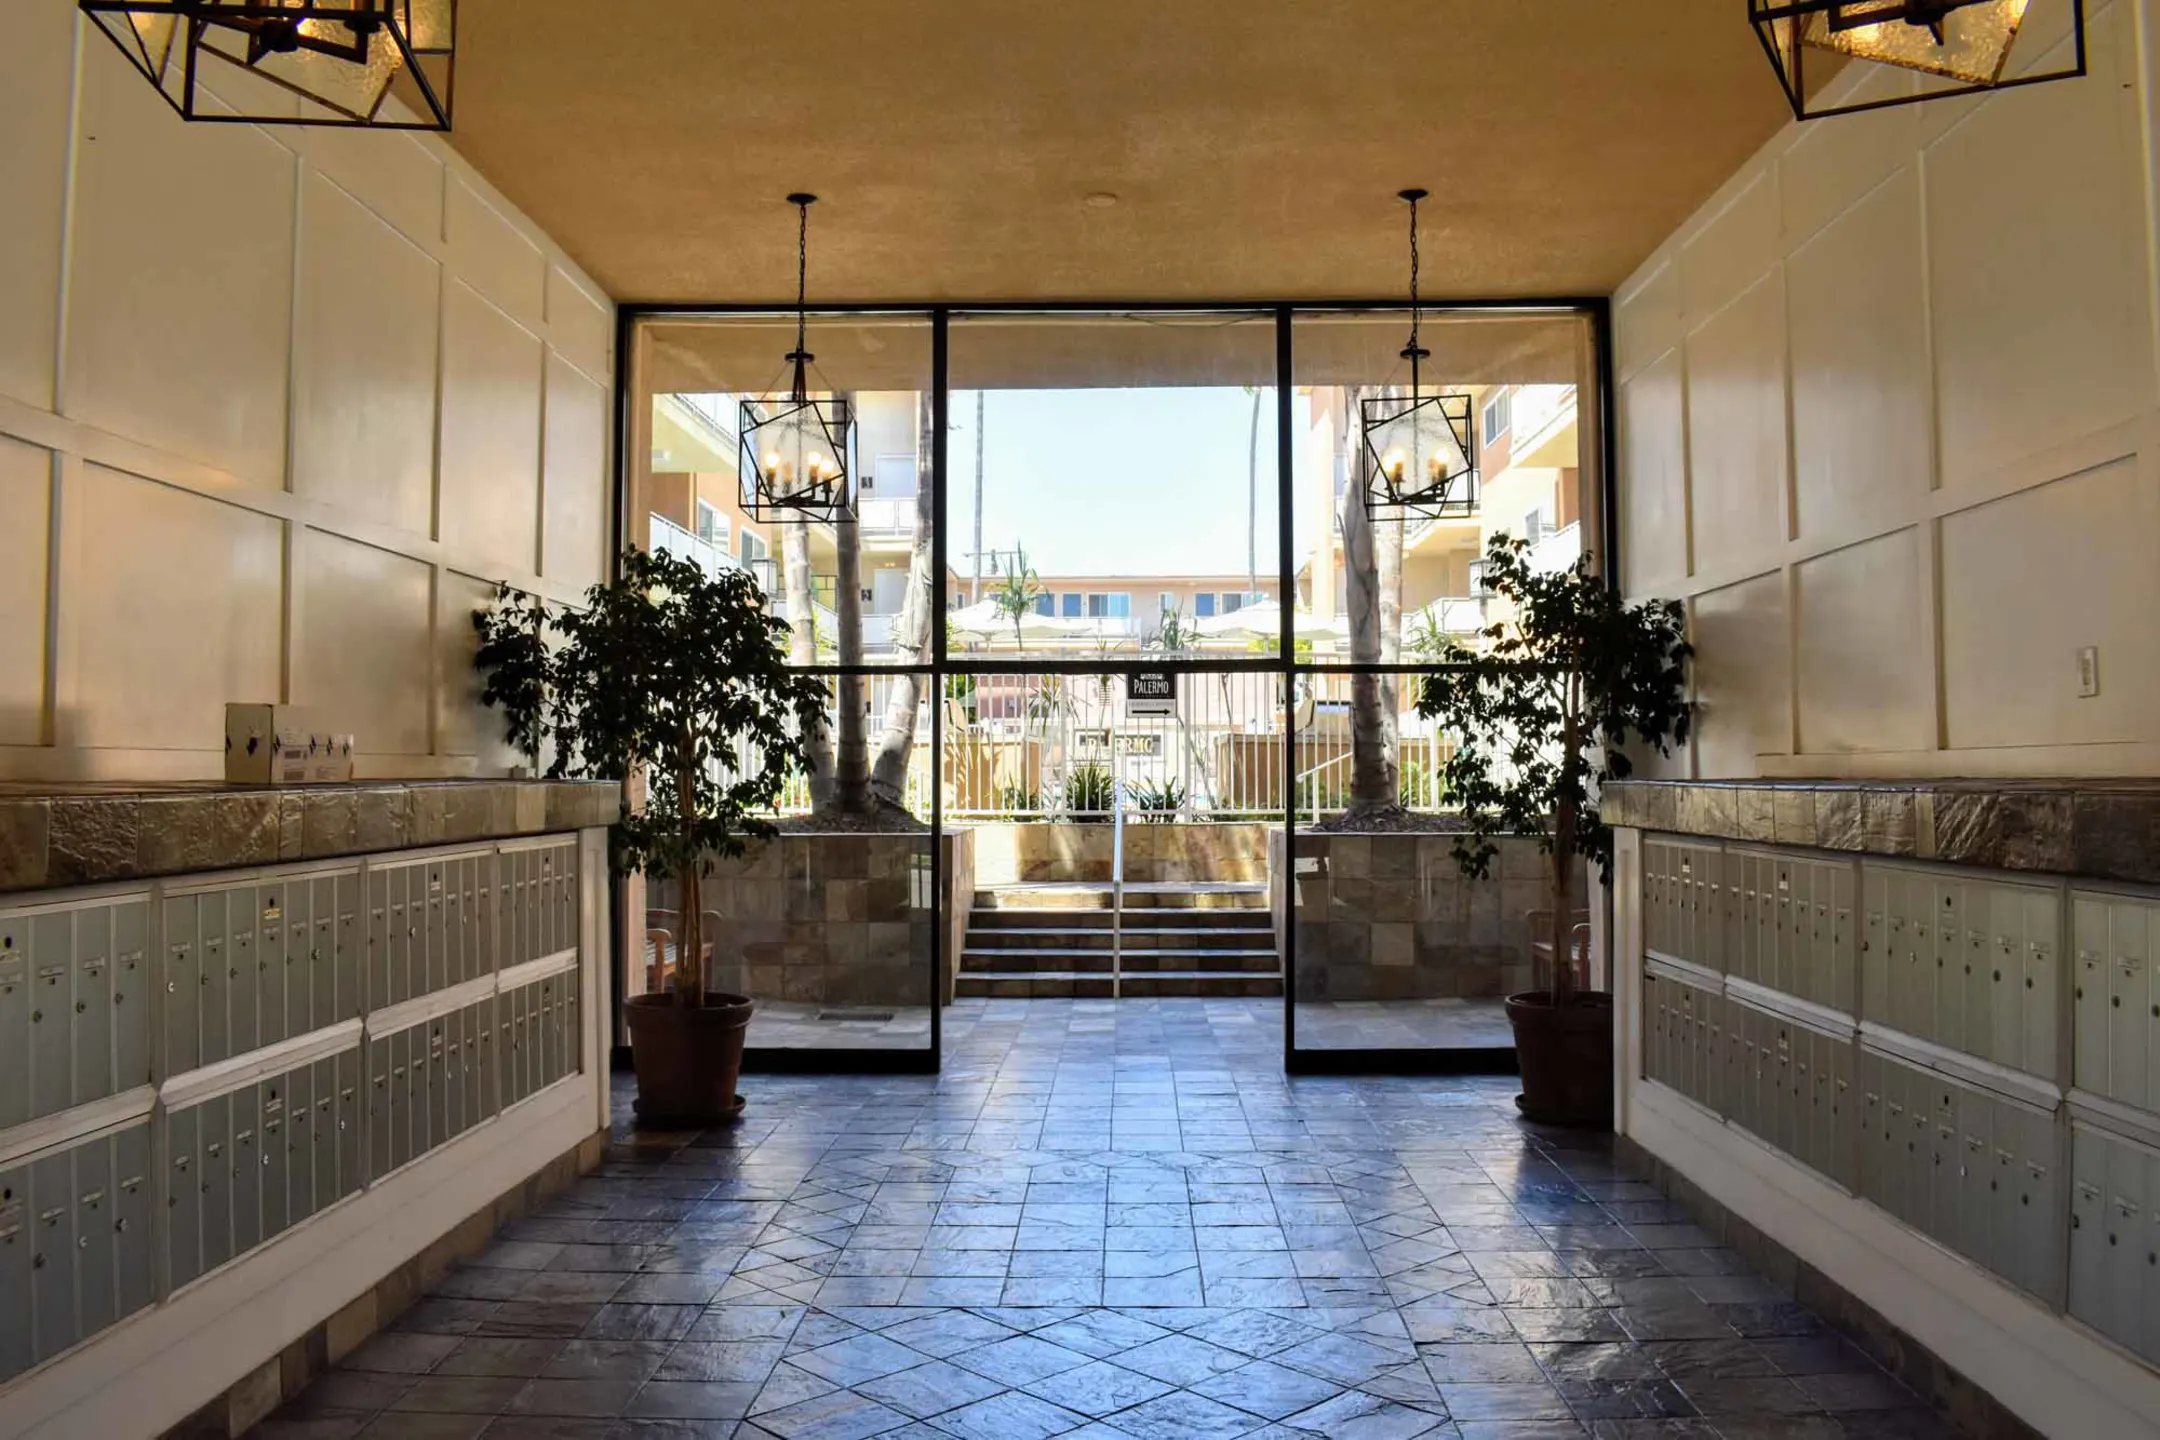 Palermo Apartments - Torrance, CA